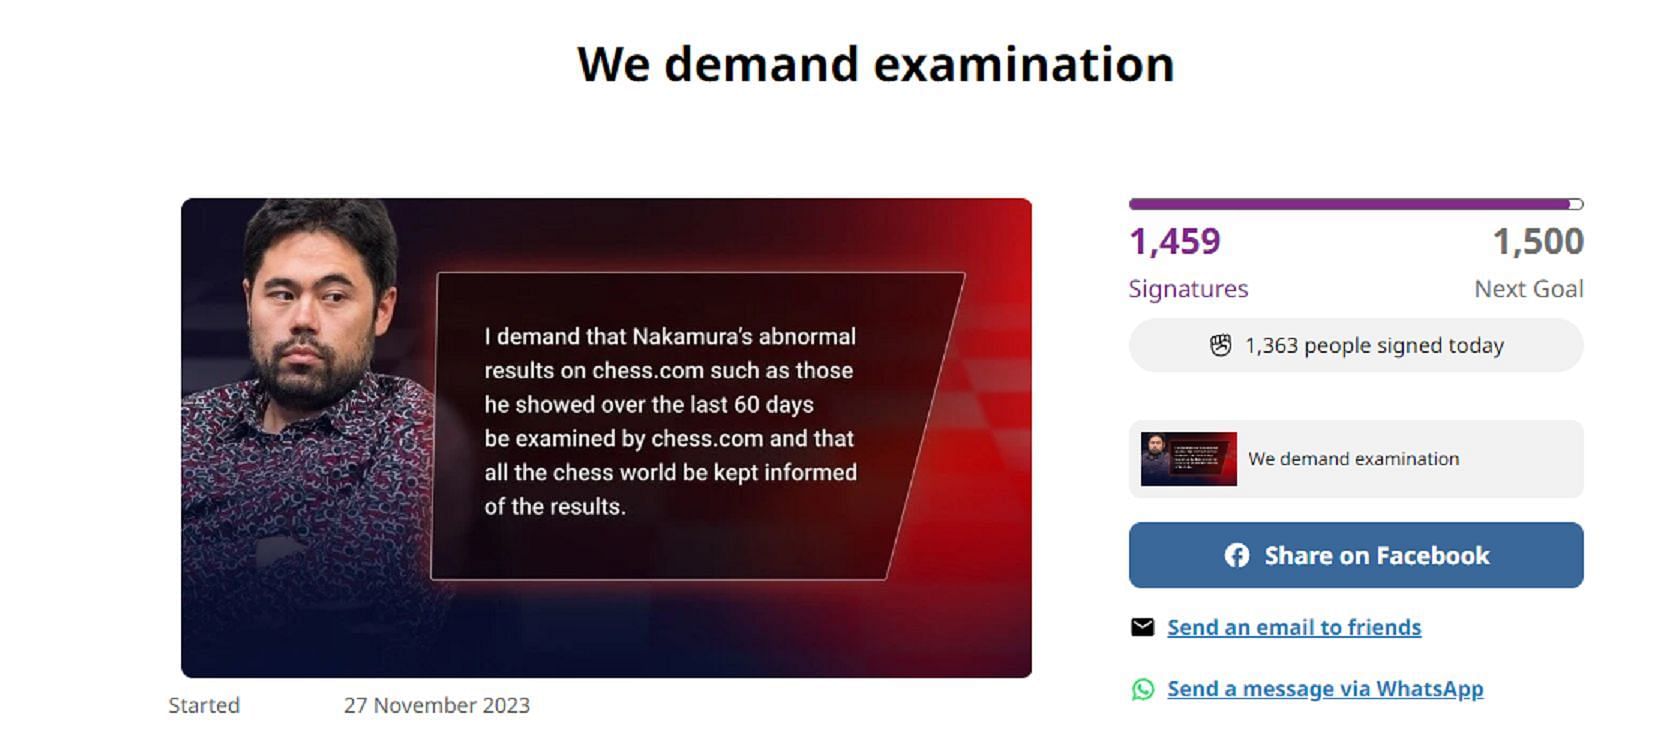 We demand examination” - Vladimir Kramnik starts petition against GMHikaru  amid feud, calls latter's results “abnormal”